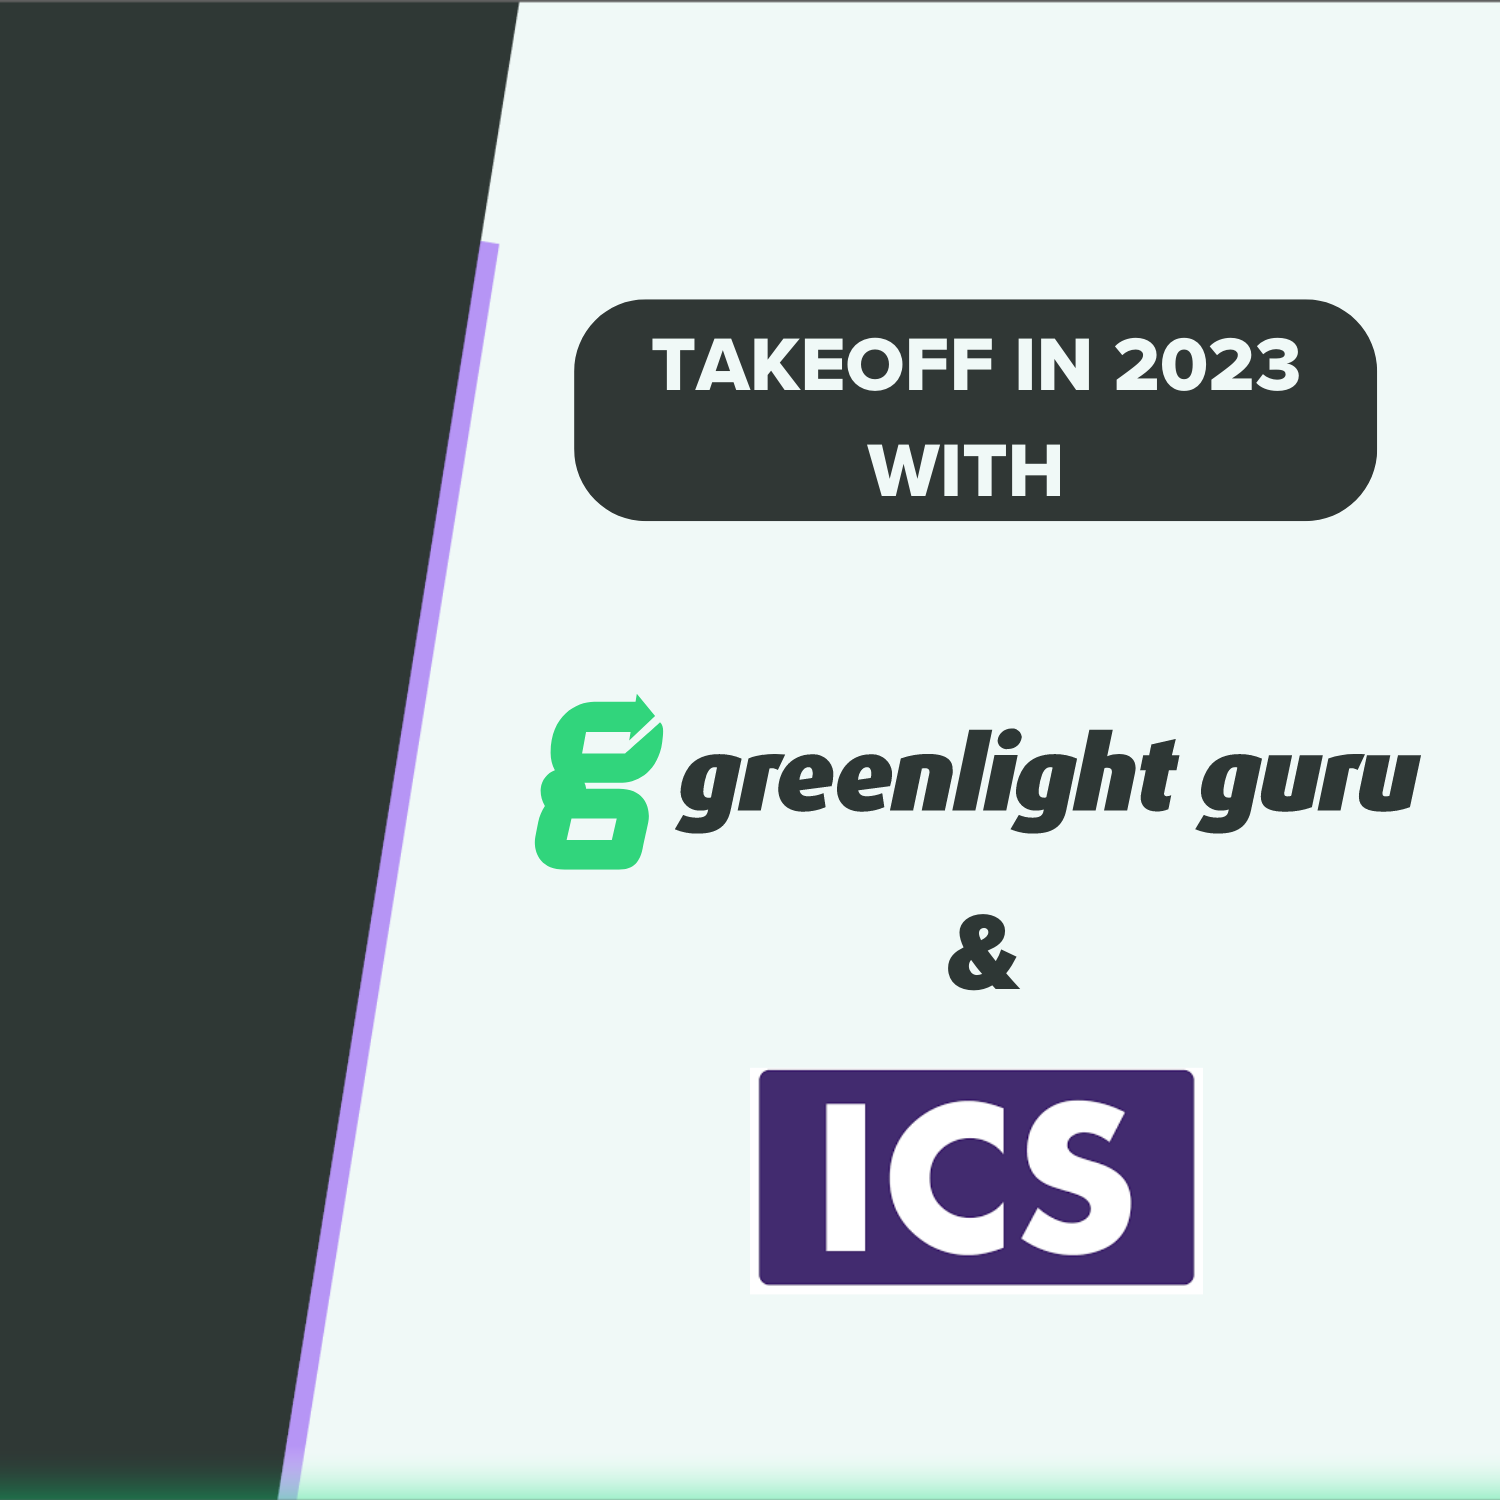 Greenlight Guru's Exclusive Offer for ICS Customers